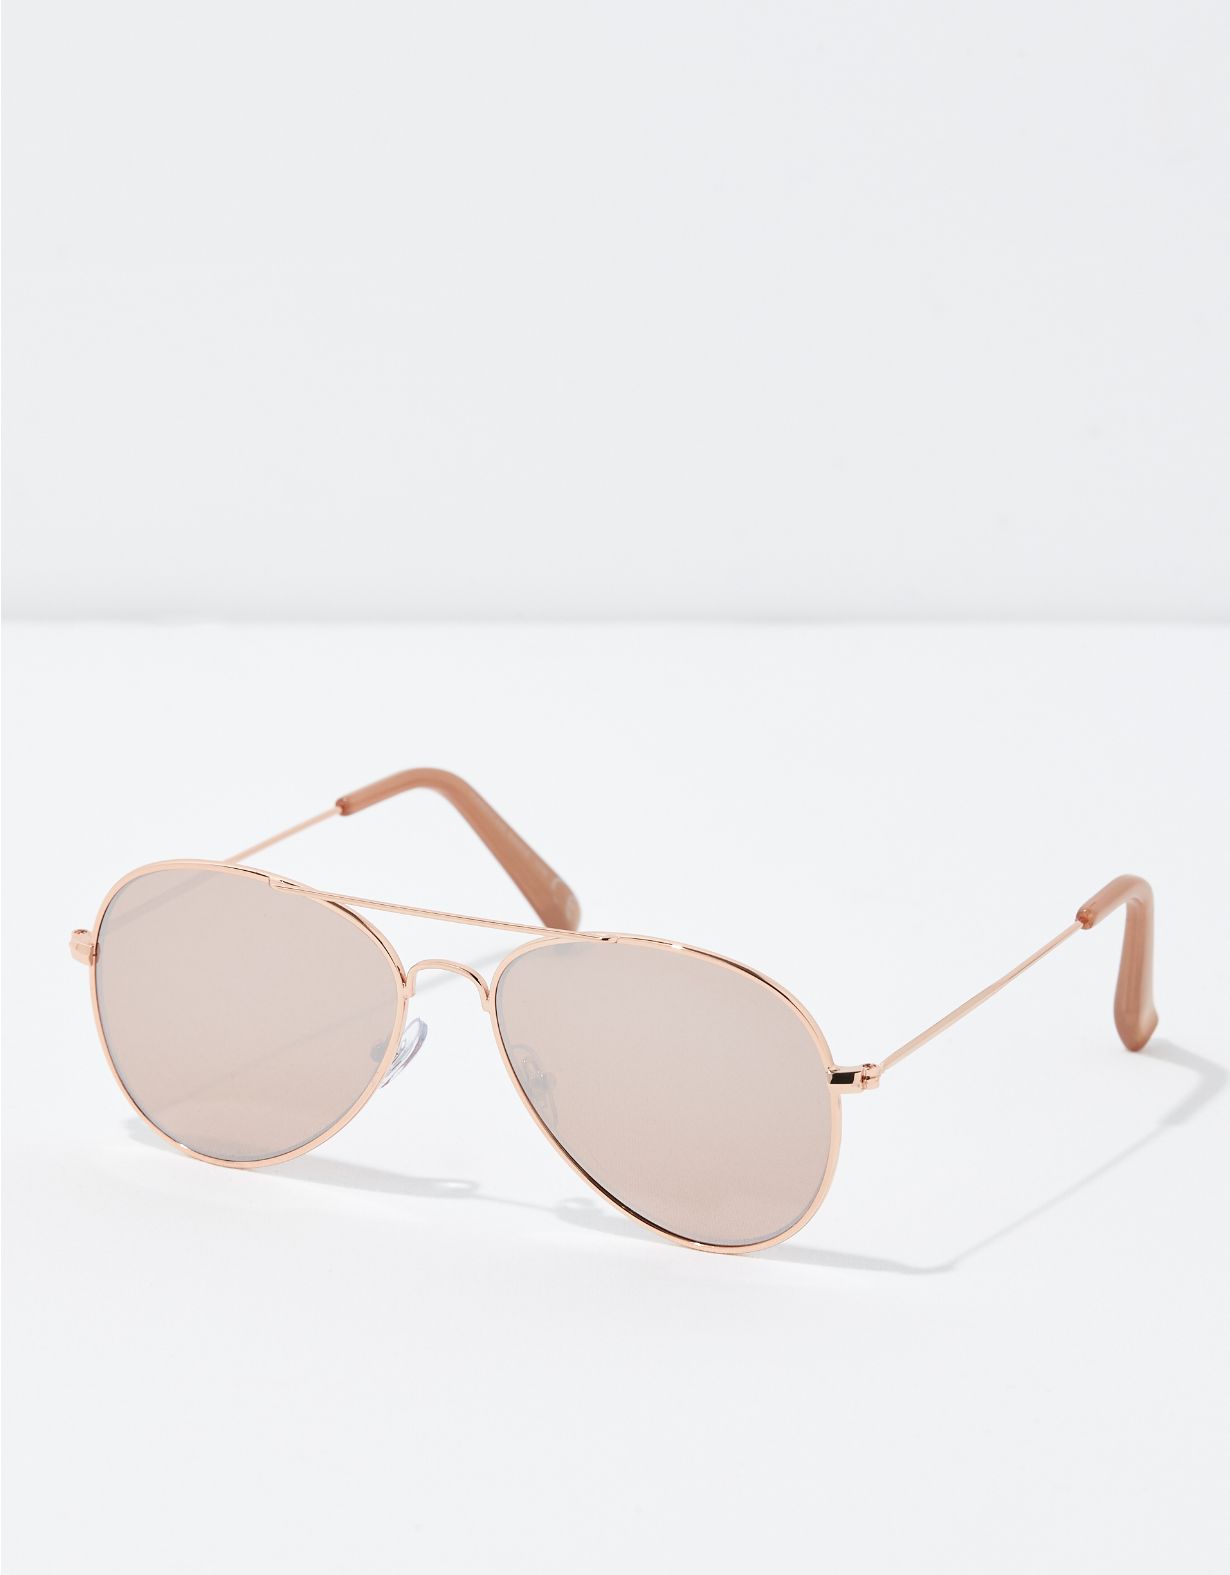 AEO Rose Gold Aviator Sunglasses